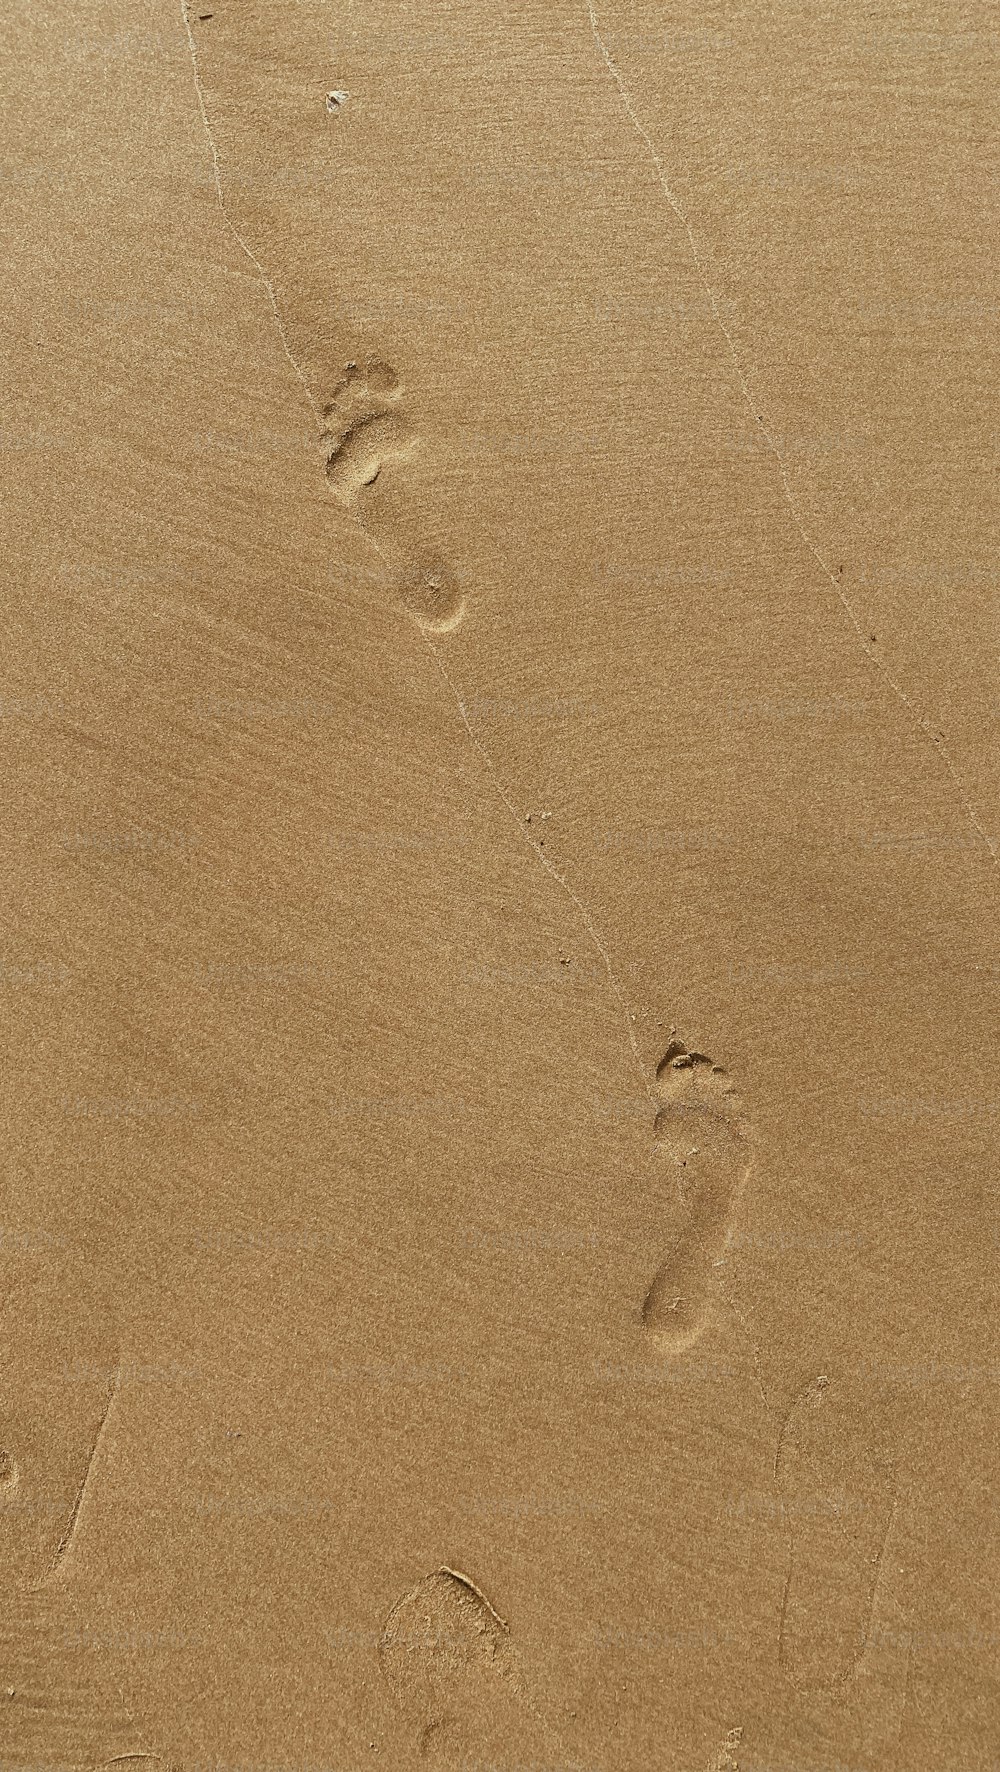 footprints in the sand of a beach near the ocean